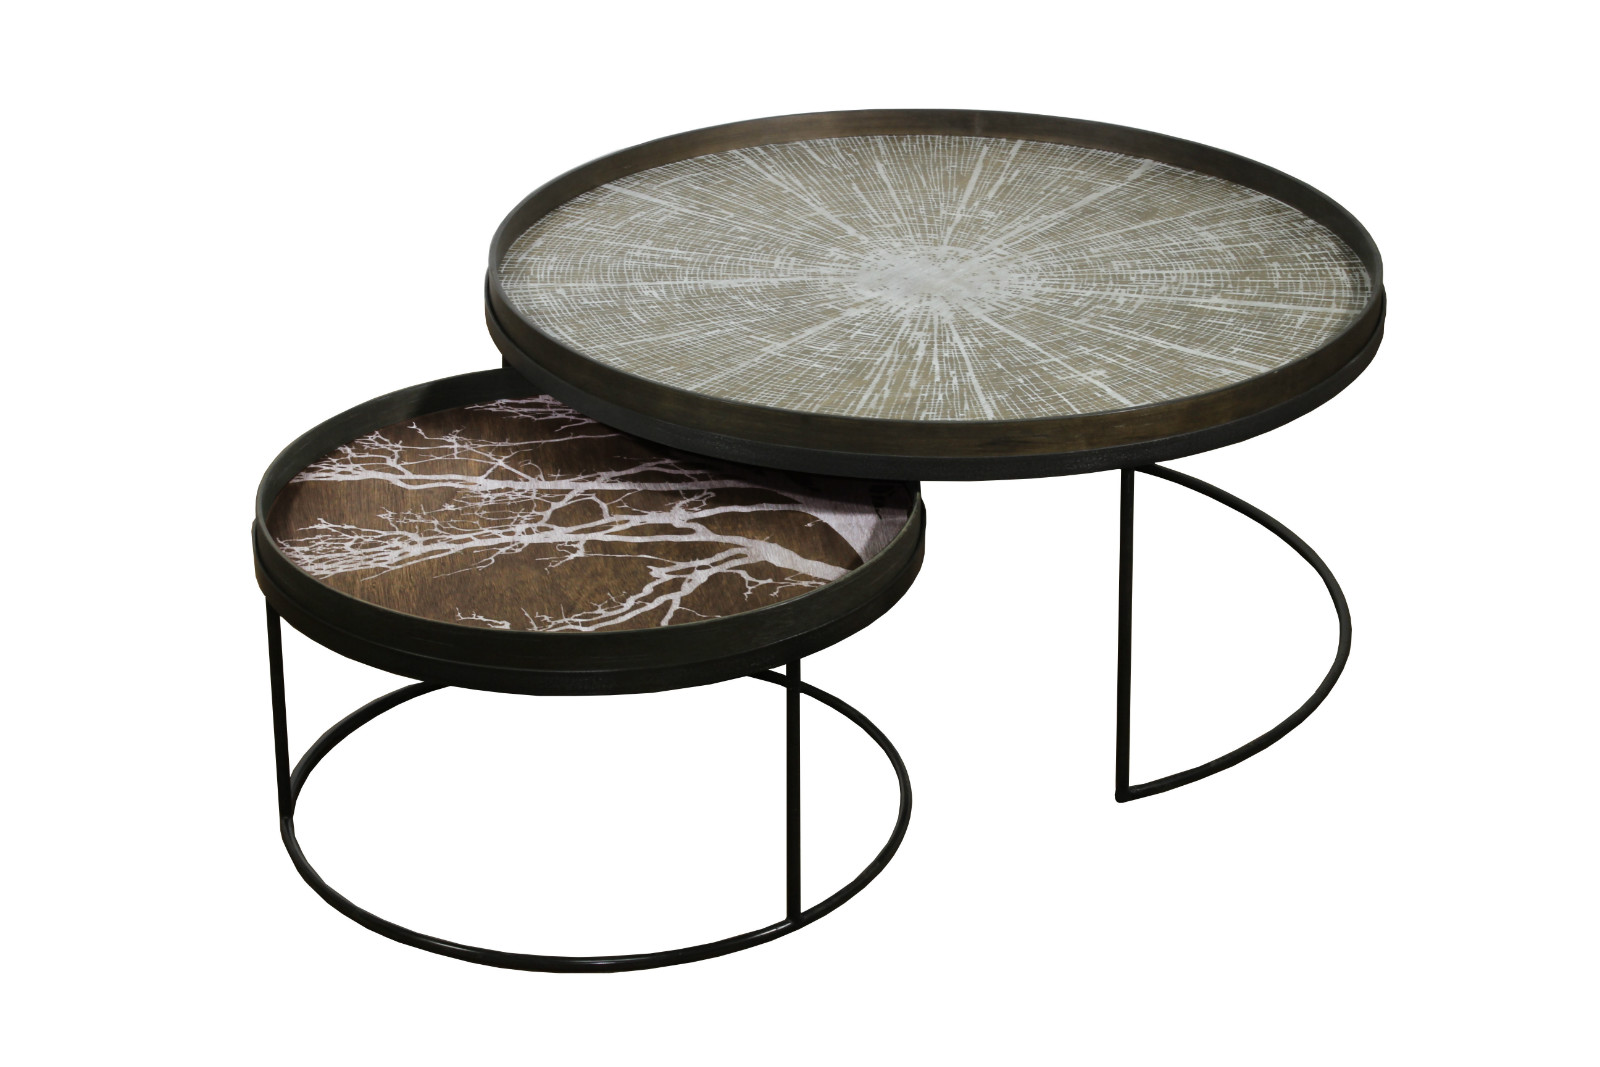 Langskomen Diplomaat Encommium Round Tray Table Salontafelset XL van Ethnicraft - Small furniture -  Looiershuis